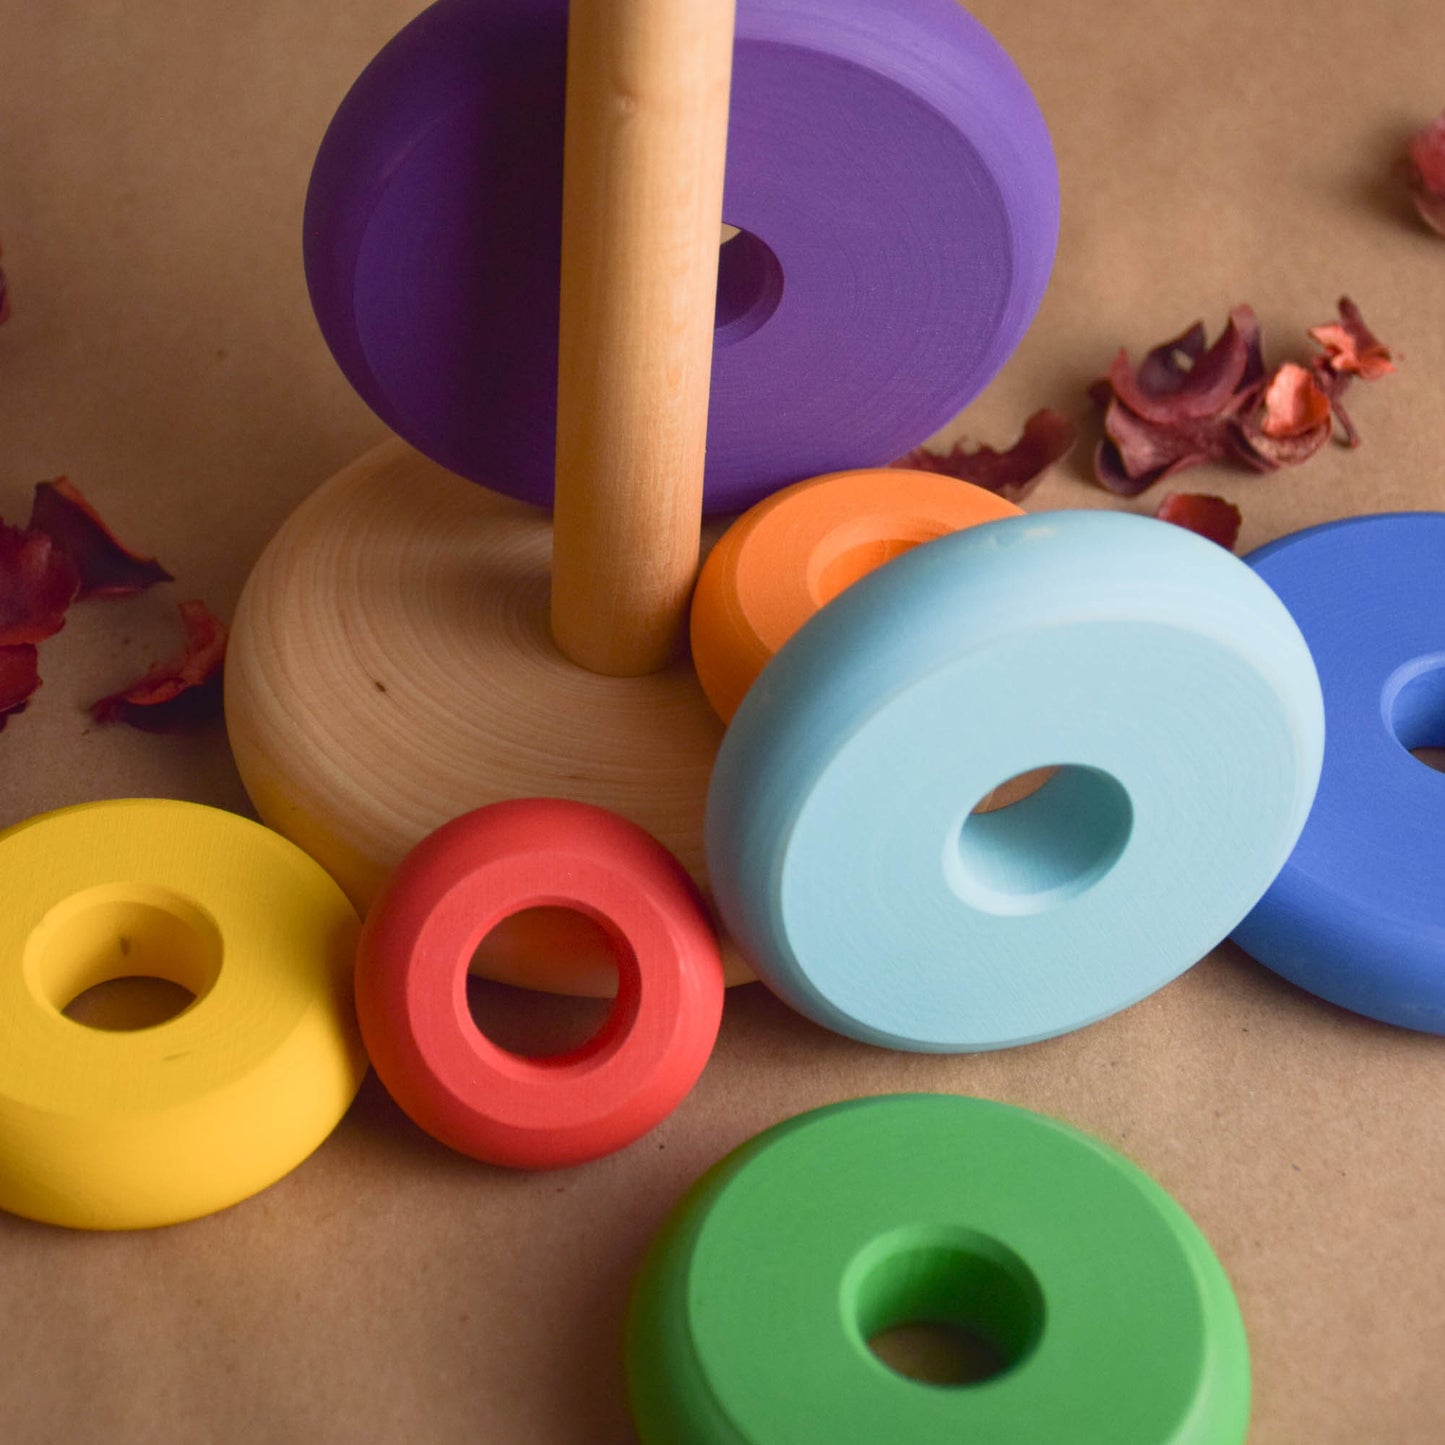 Montessori Rainbow Rring Stacker Toy